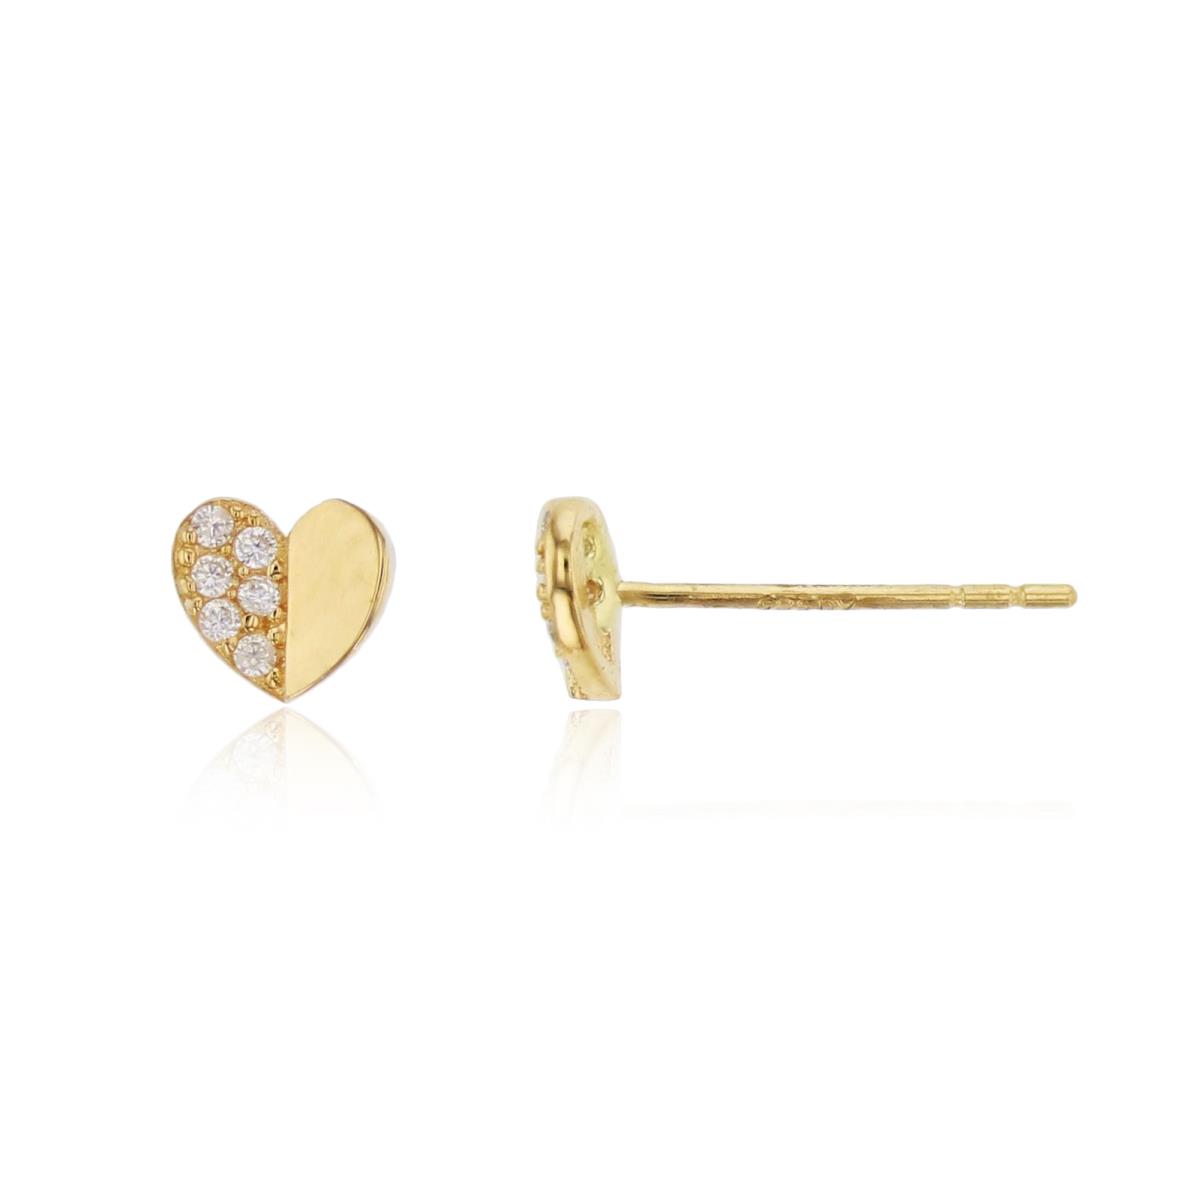 10K Yellow Gold Half Polished Half Paved Heart Stud Earring (No Back)